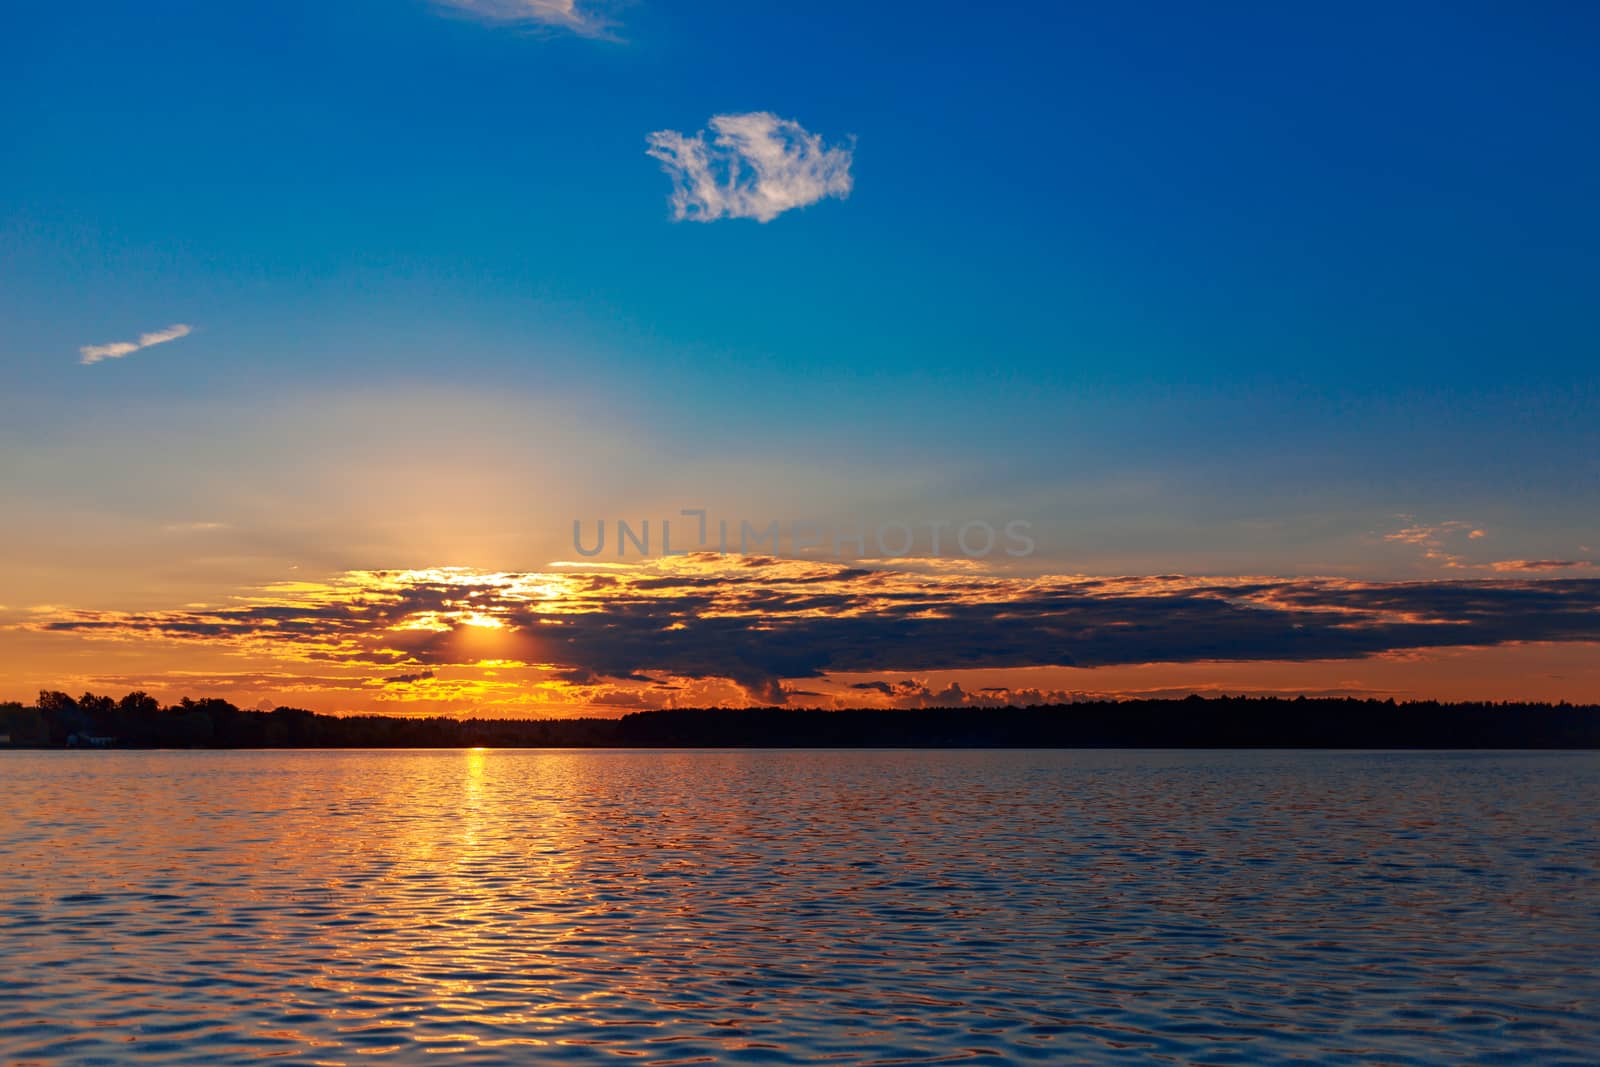 Pink-yellow sunset and sun reflection on lake water surface.